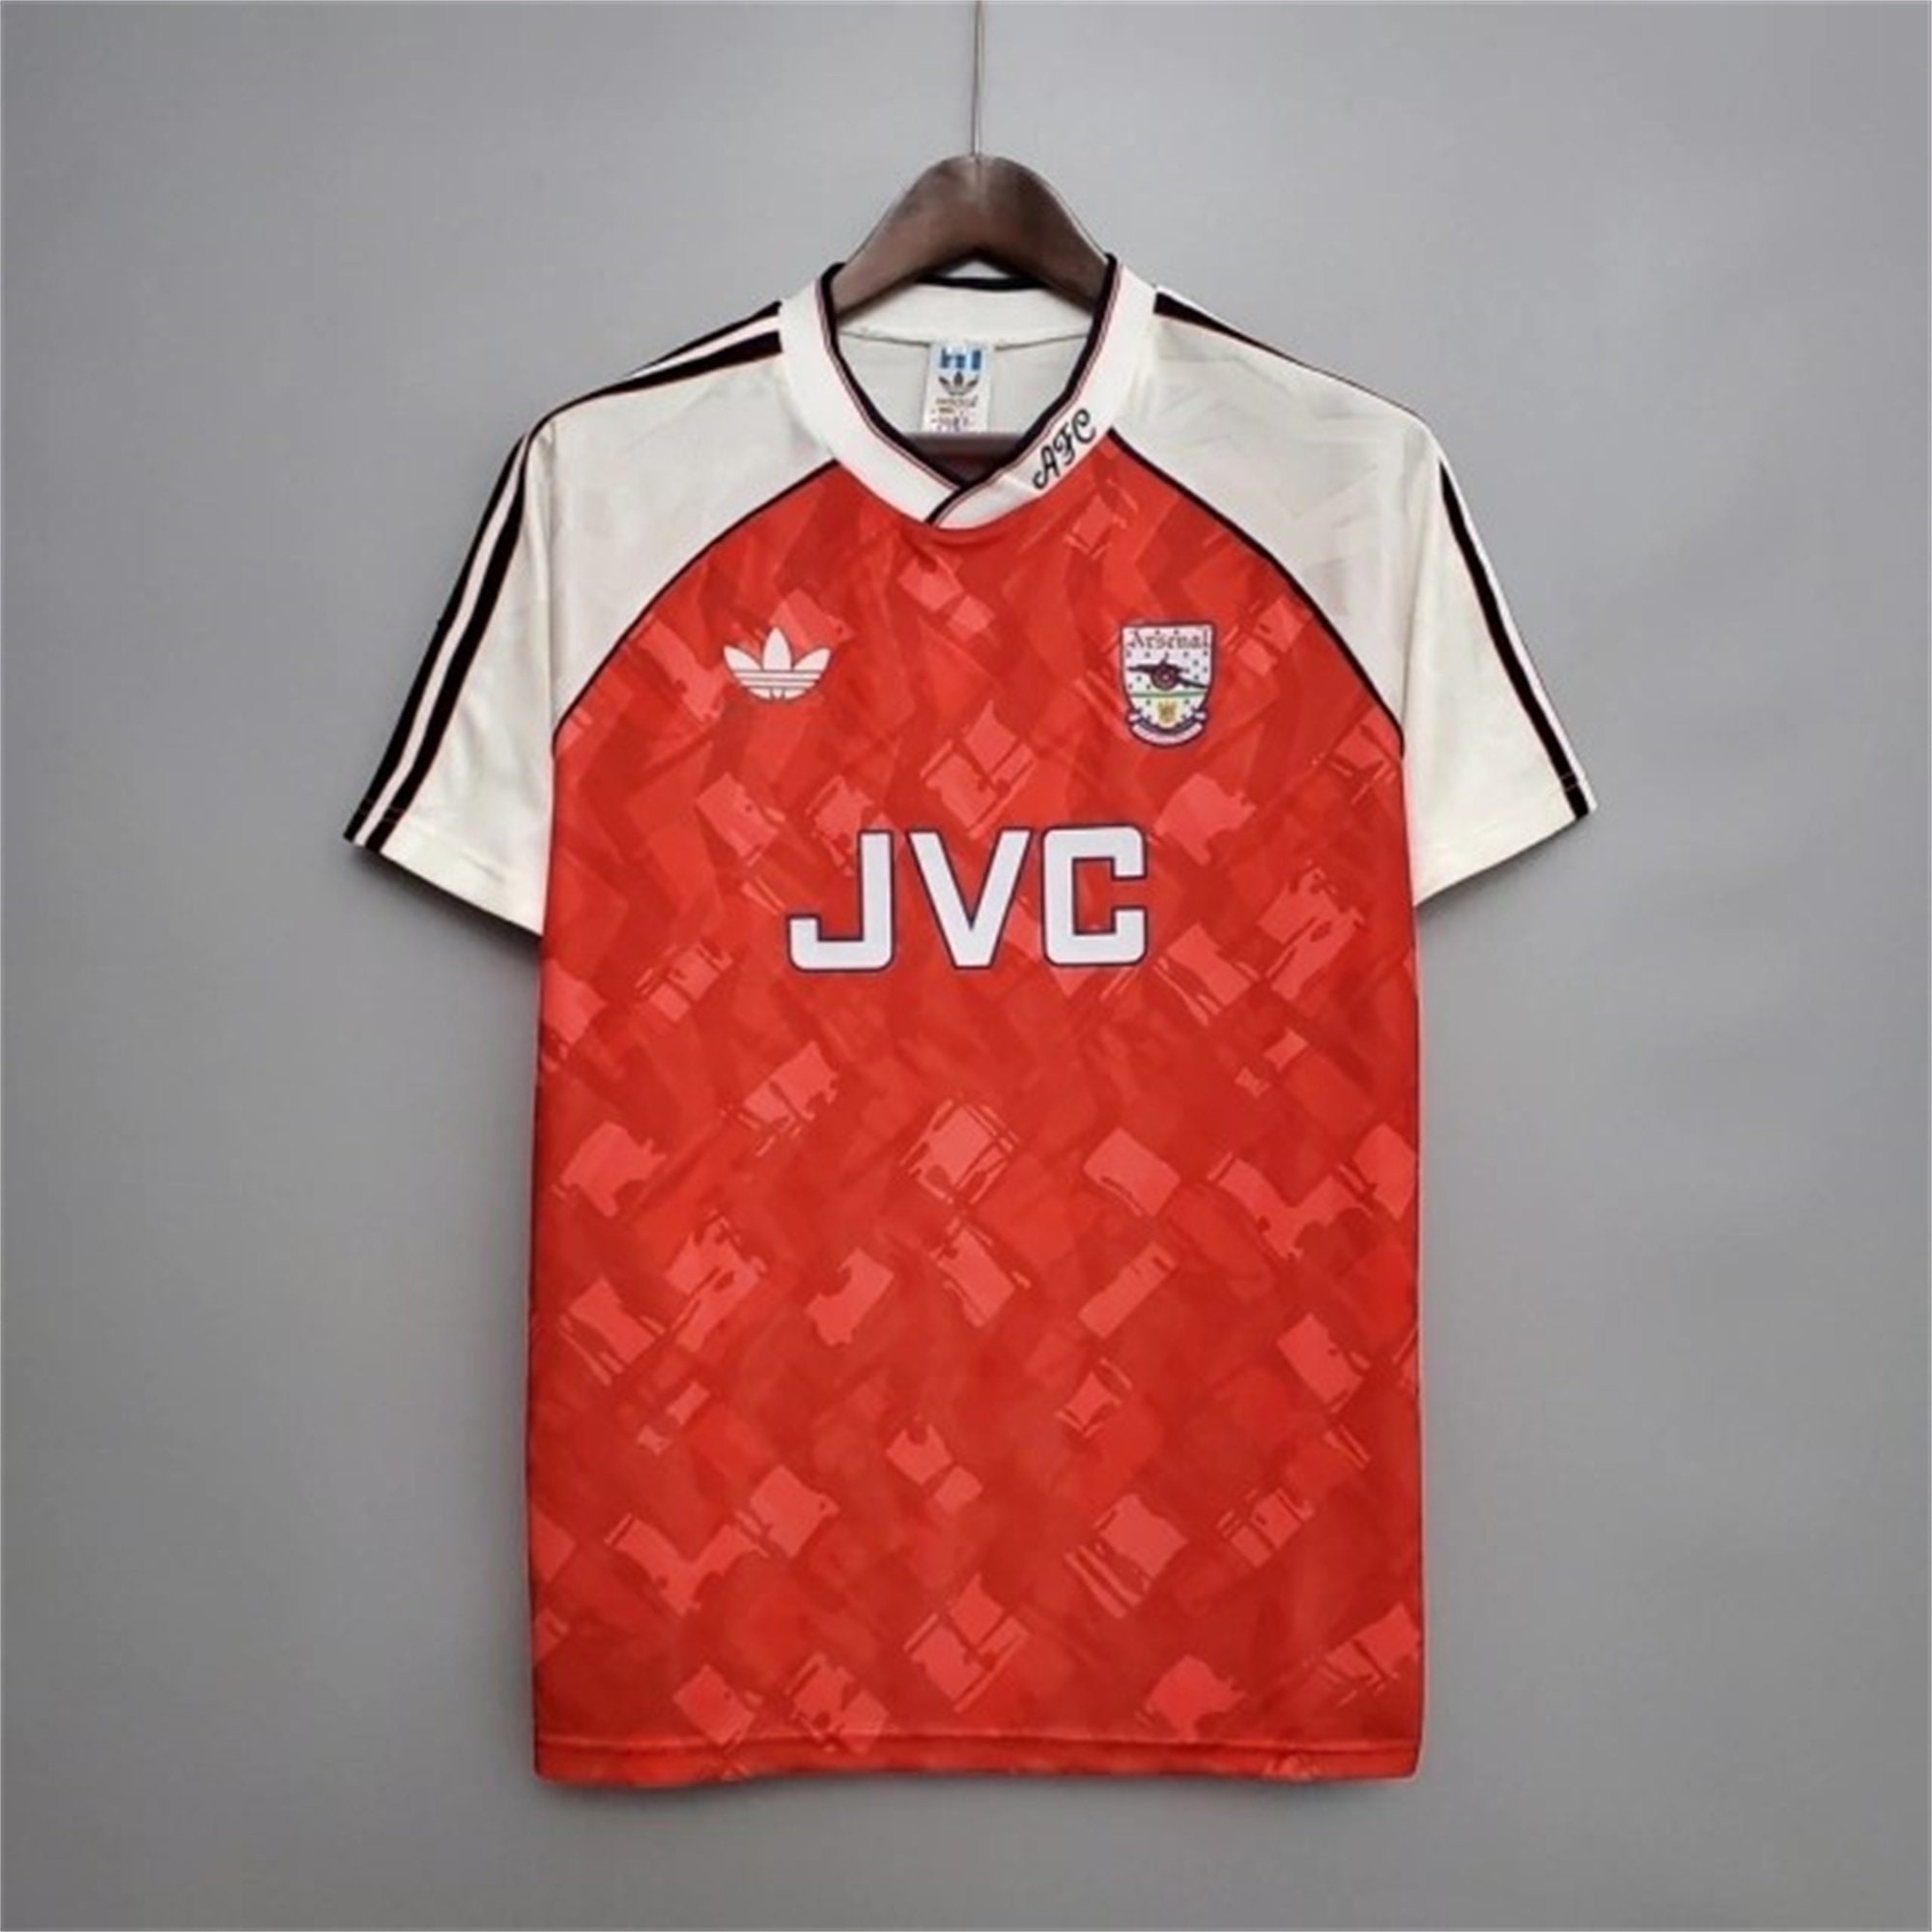 Arsenal Retro Jerseys & Shirts - Vintage Arsenal Kits for Sale